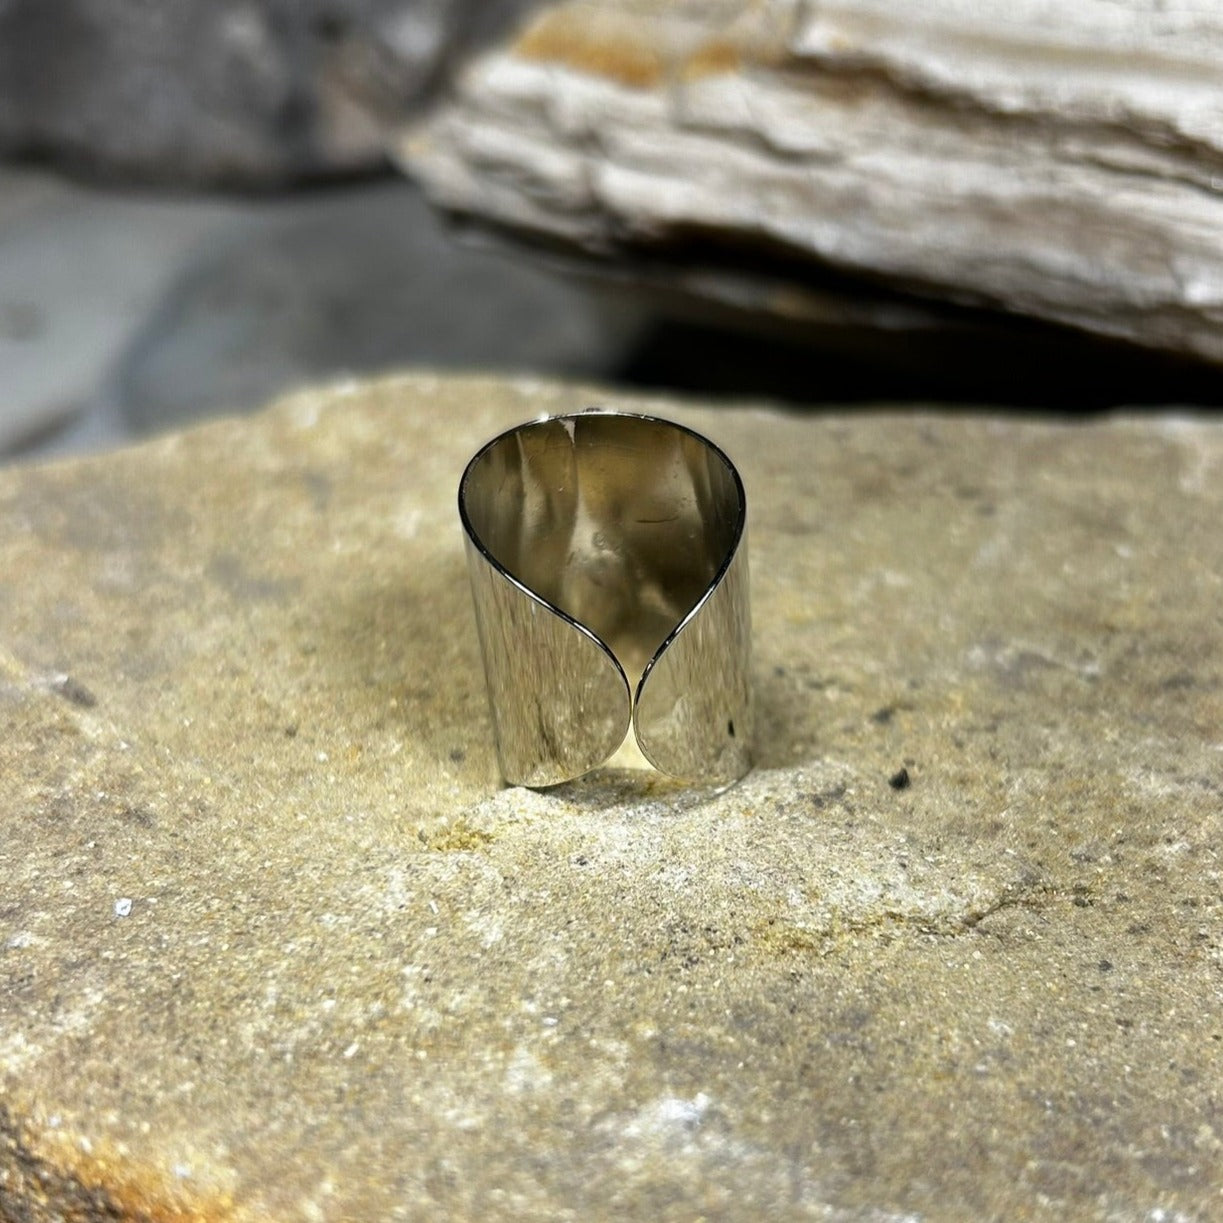 Fuchsia Teardrop Rhinestone Ring